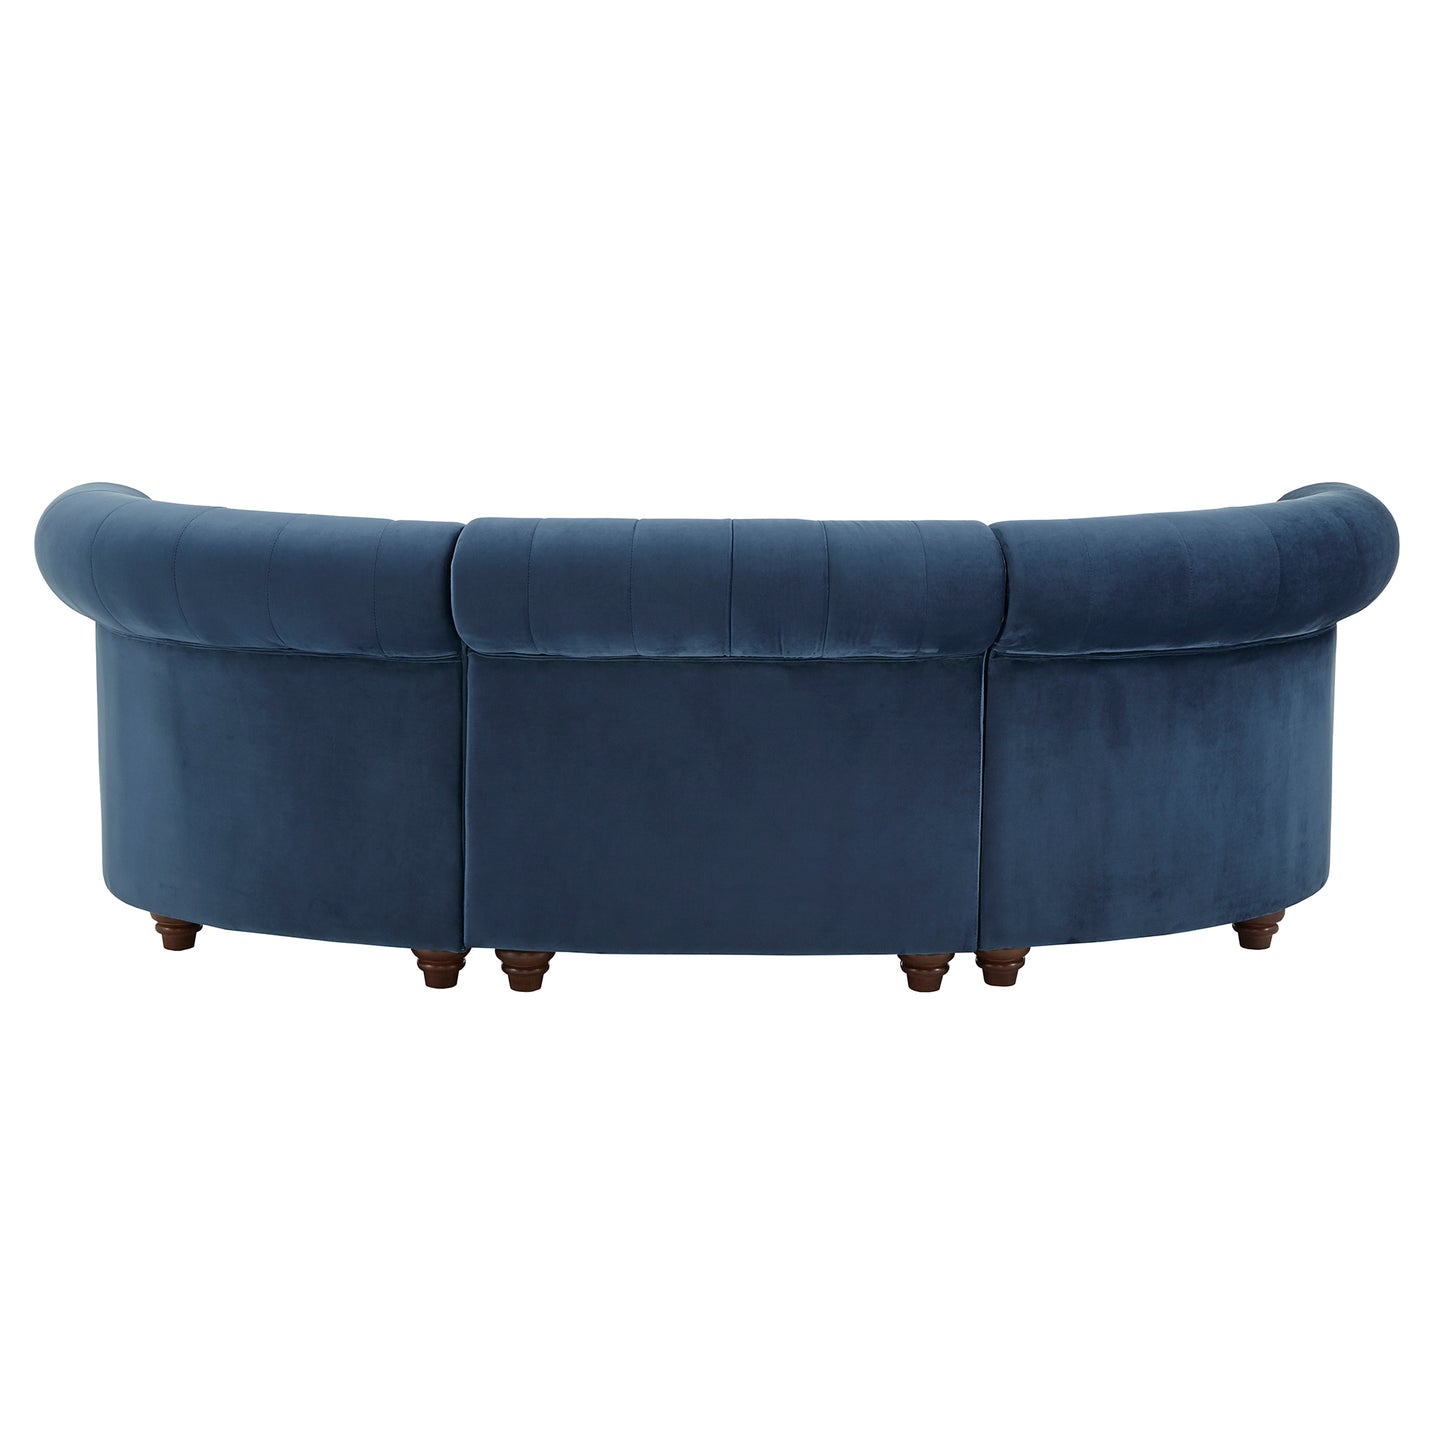 Tufted Scroll Arm Chesterfield Curved Sofa - Blue Velvet